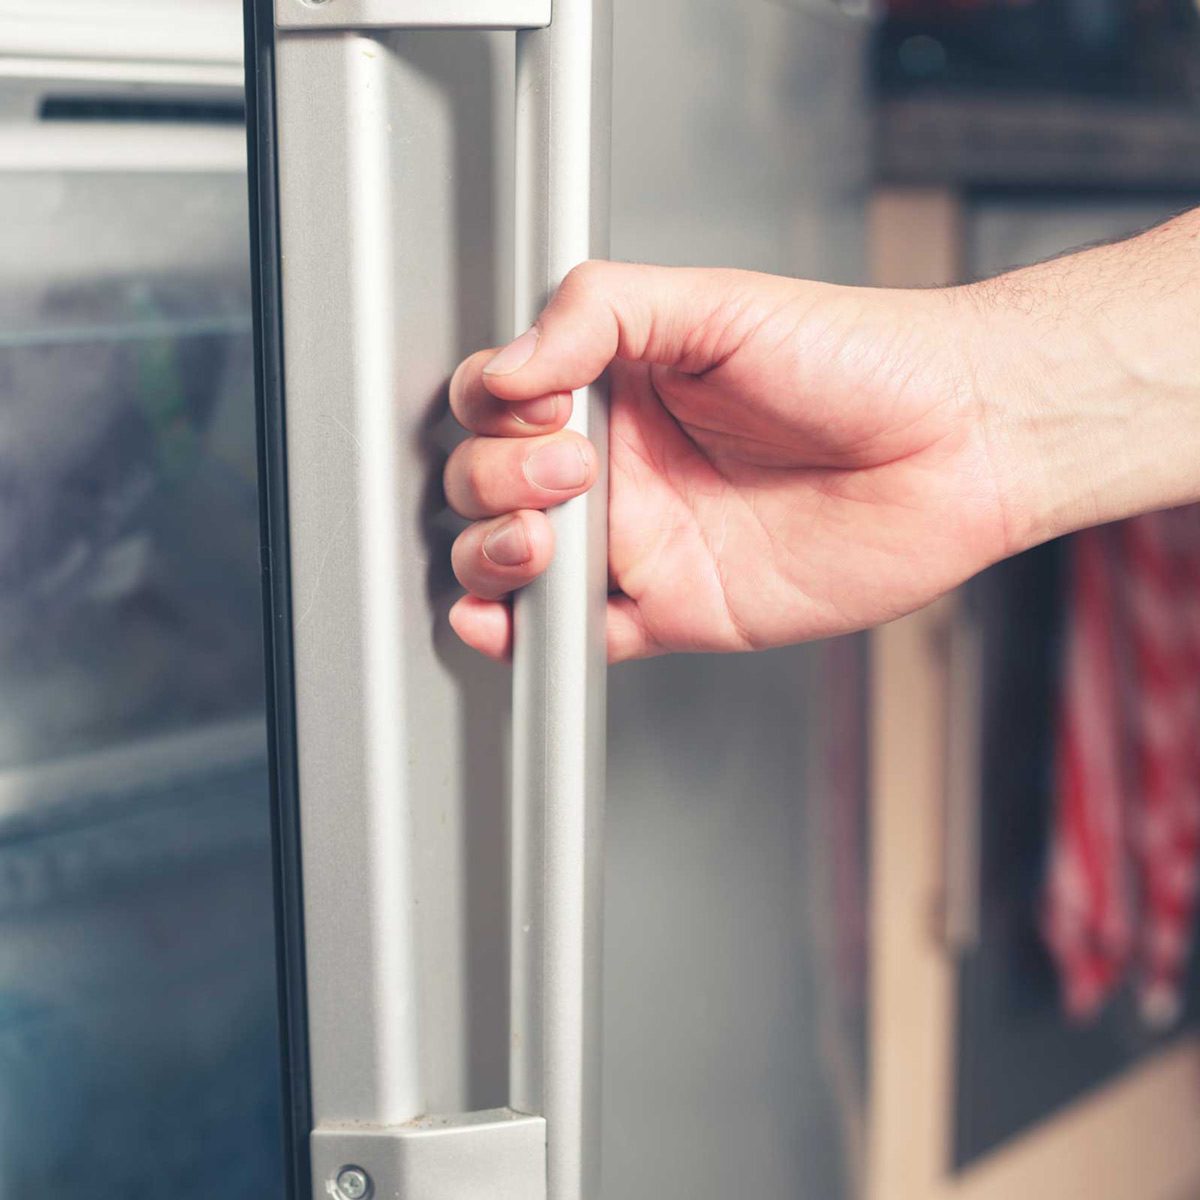 How to Make a Garage Refrigerator Work (DIY)